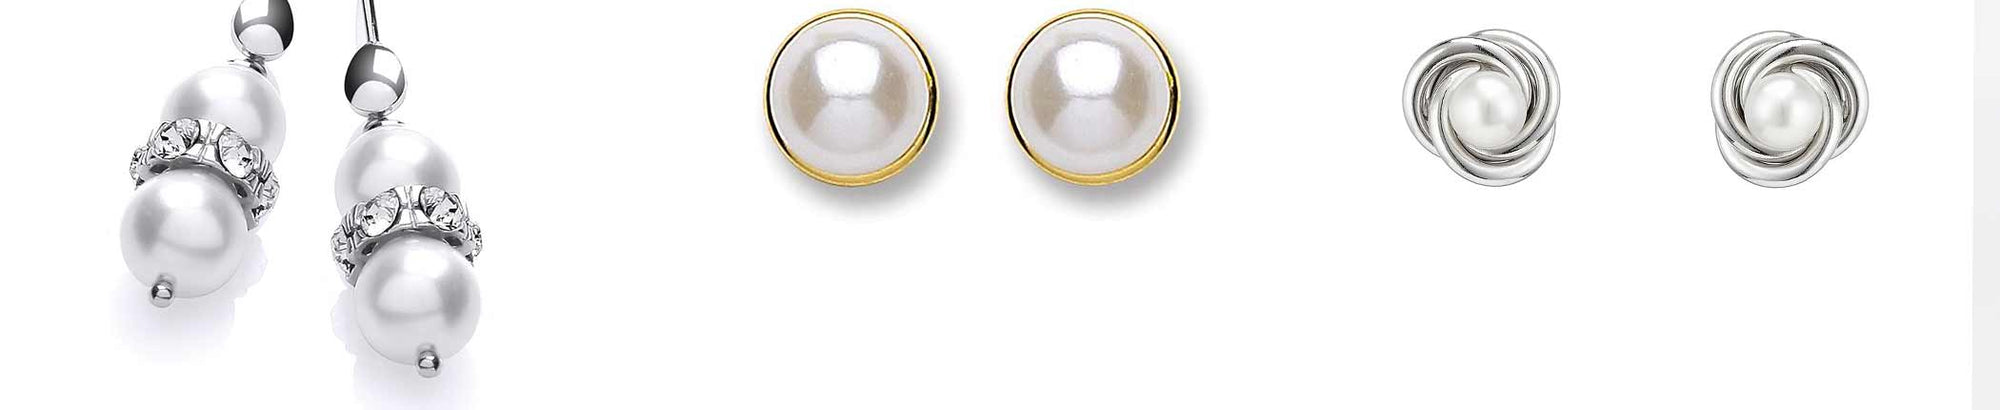 <font color=#000000>Pearl Earrings: FAQs</font>